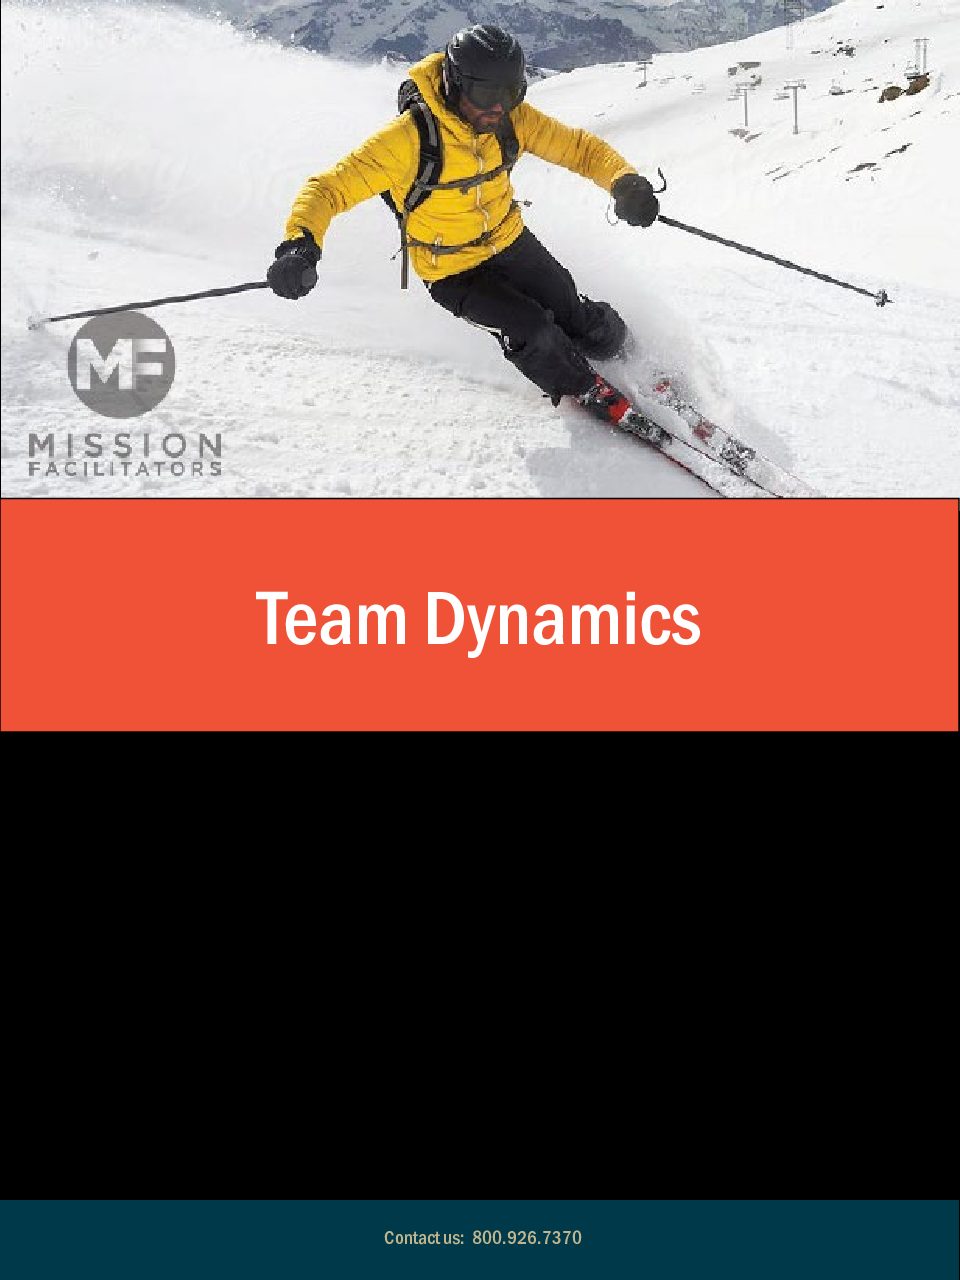 MFI-Effective-Team-Dynamics-pdf-image